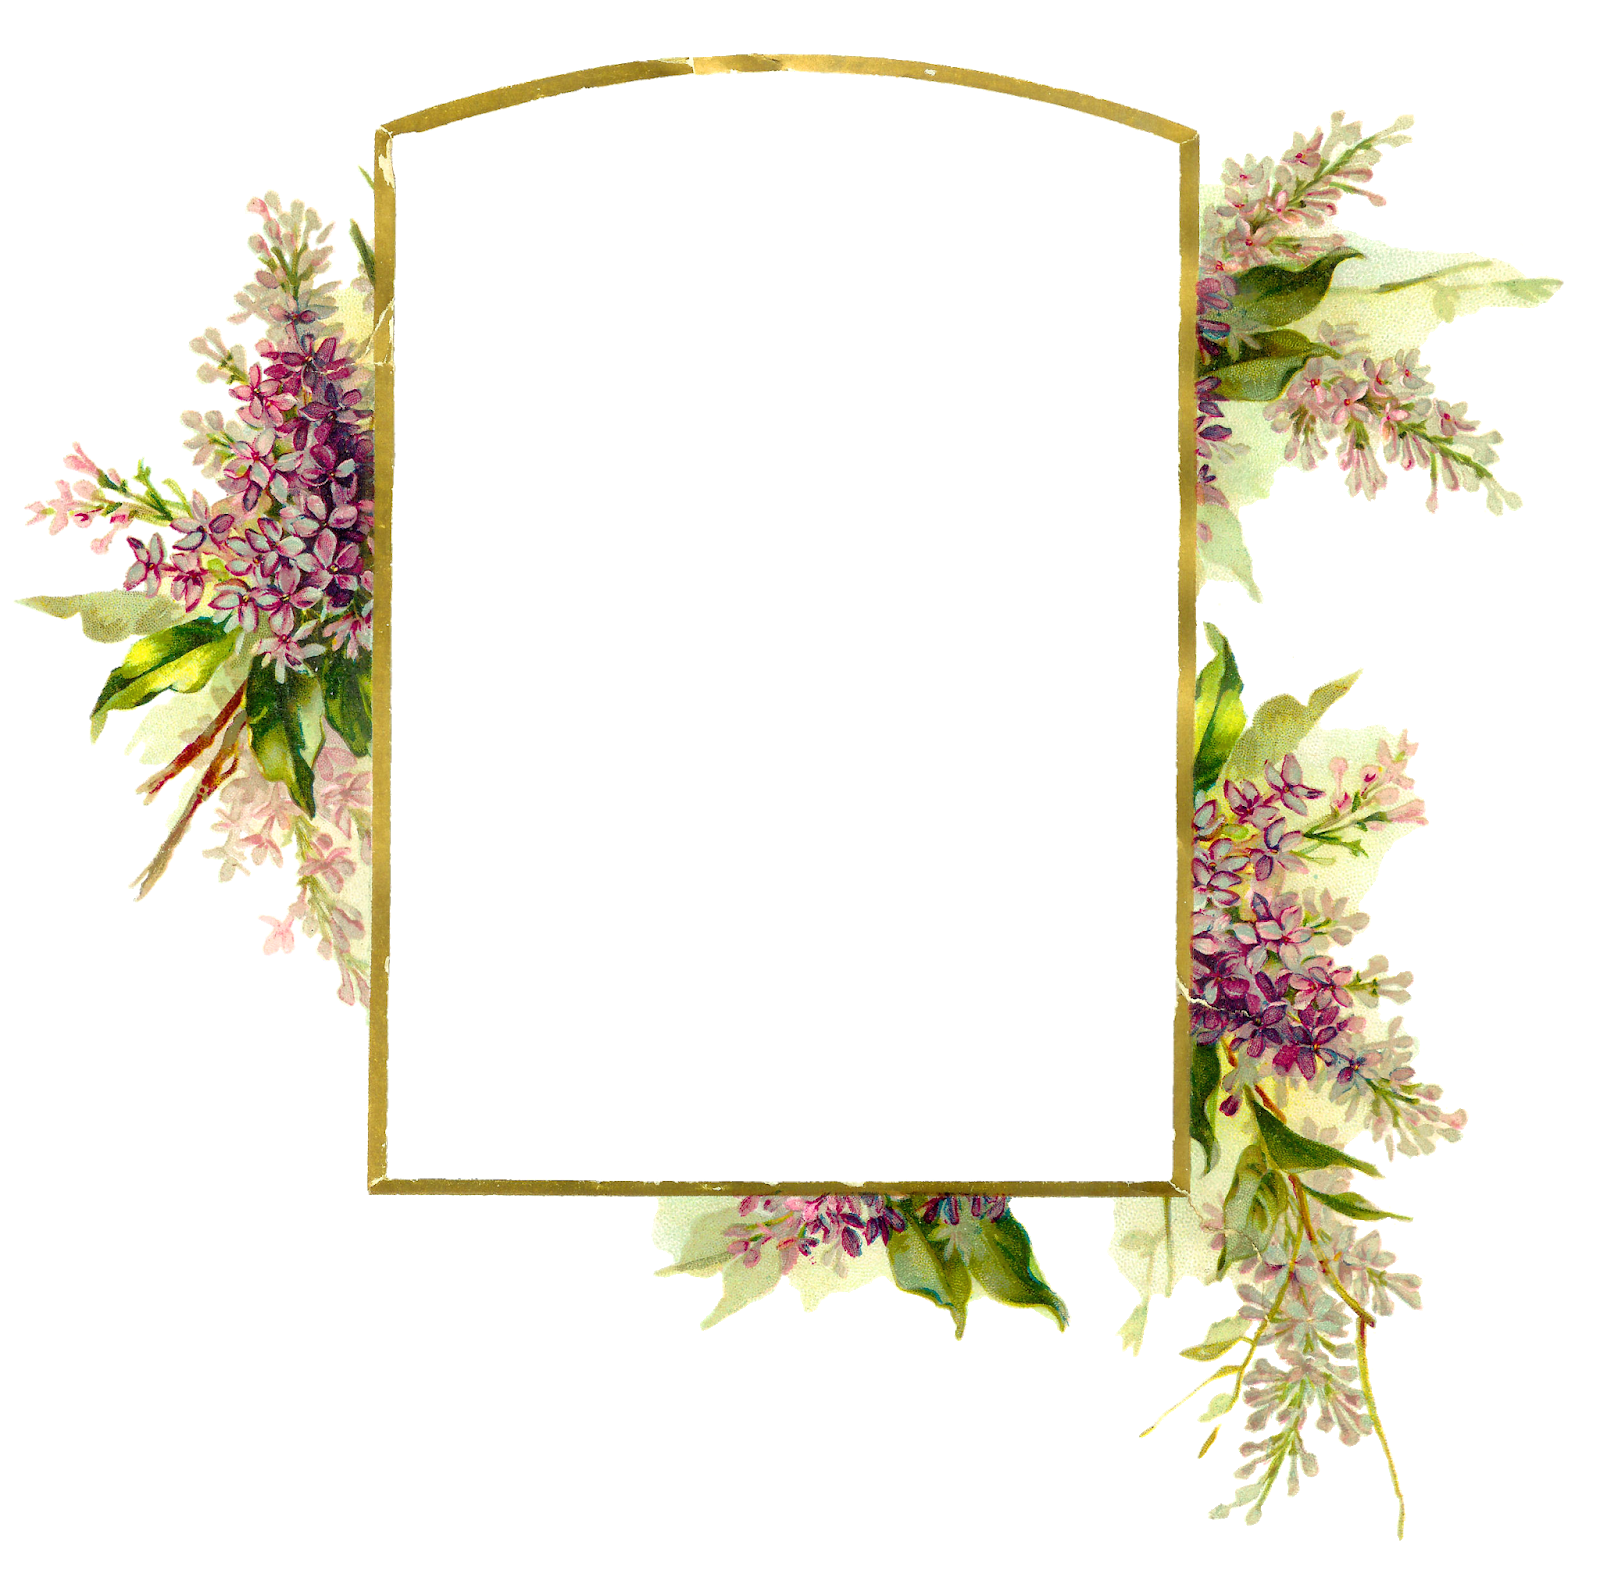 Frame Flowers Wedding Free Download Image PNG Image